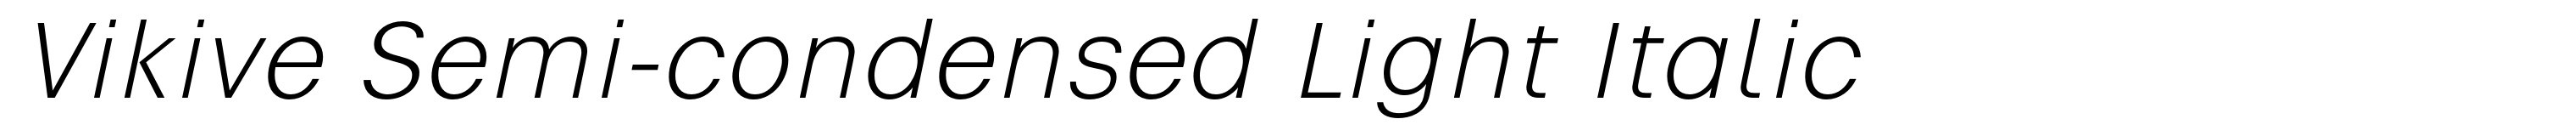 Vikive Semi-condensed Light Italic